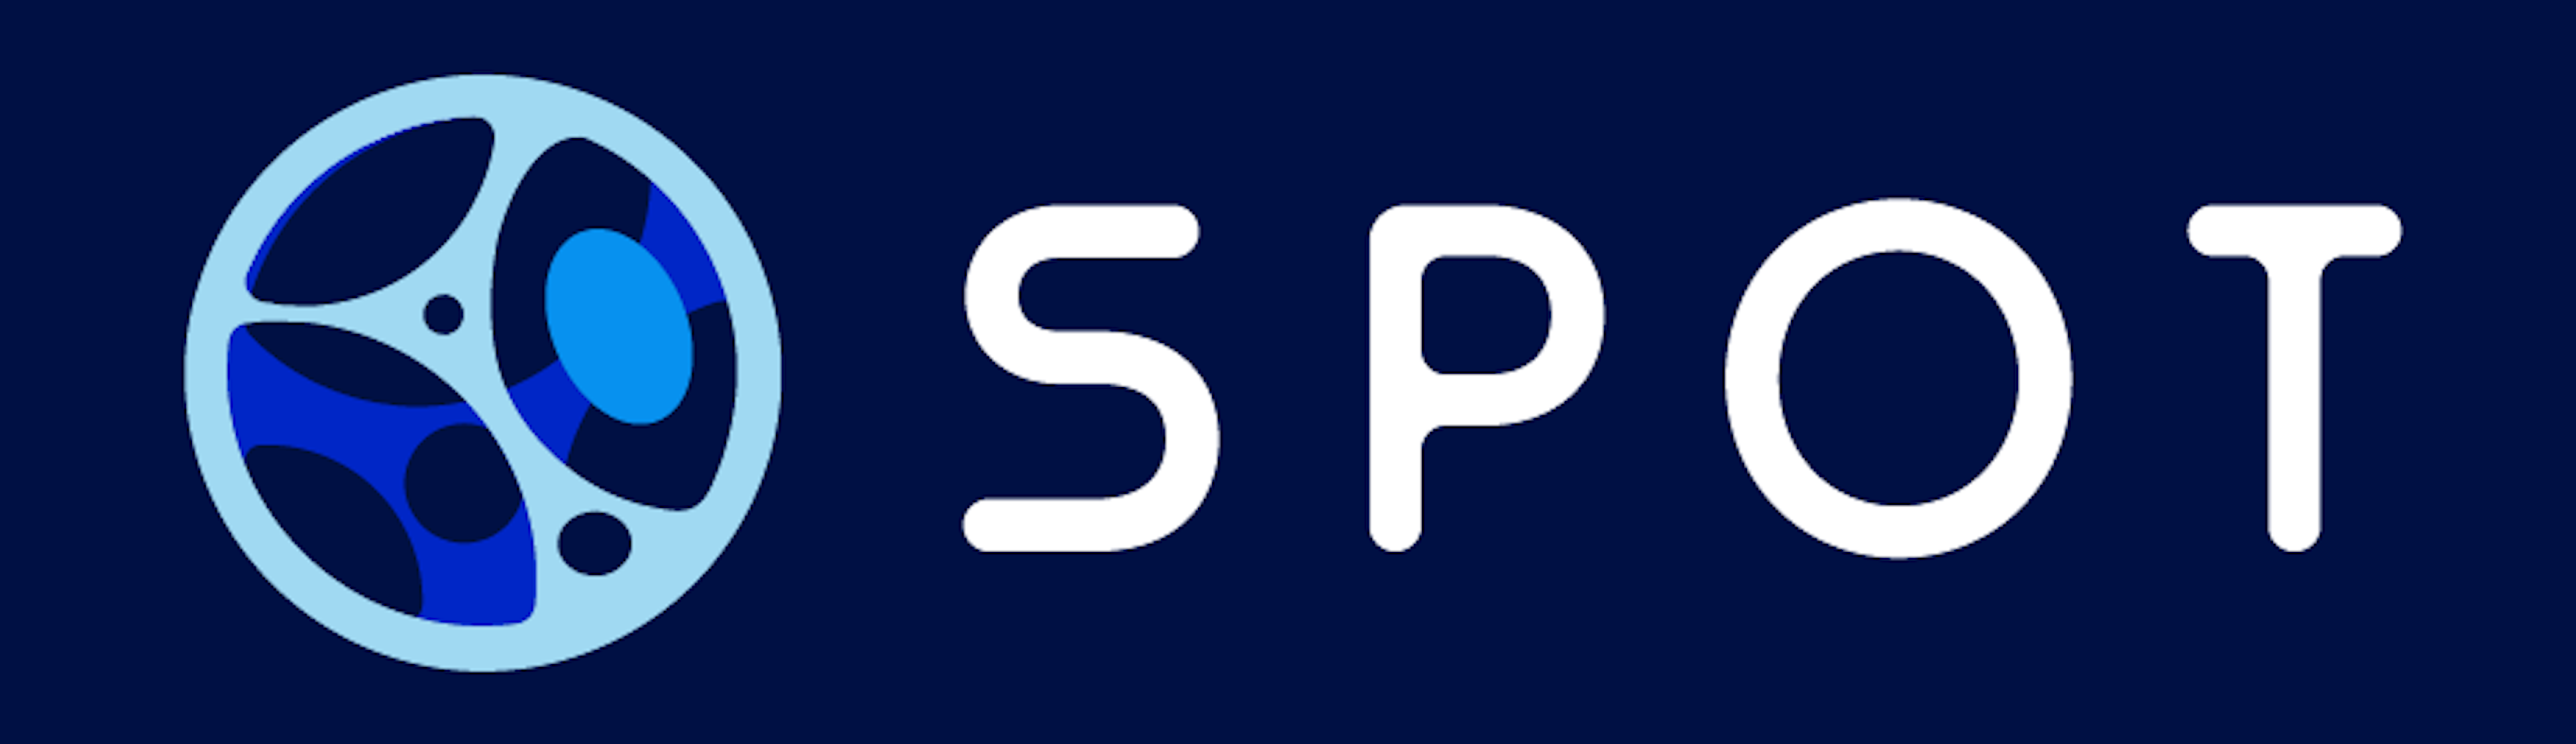 blue version of spot logo